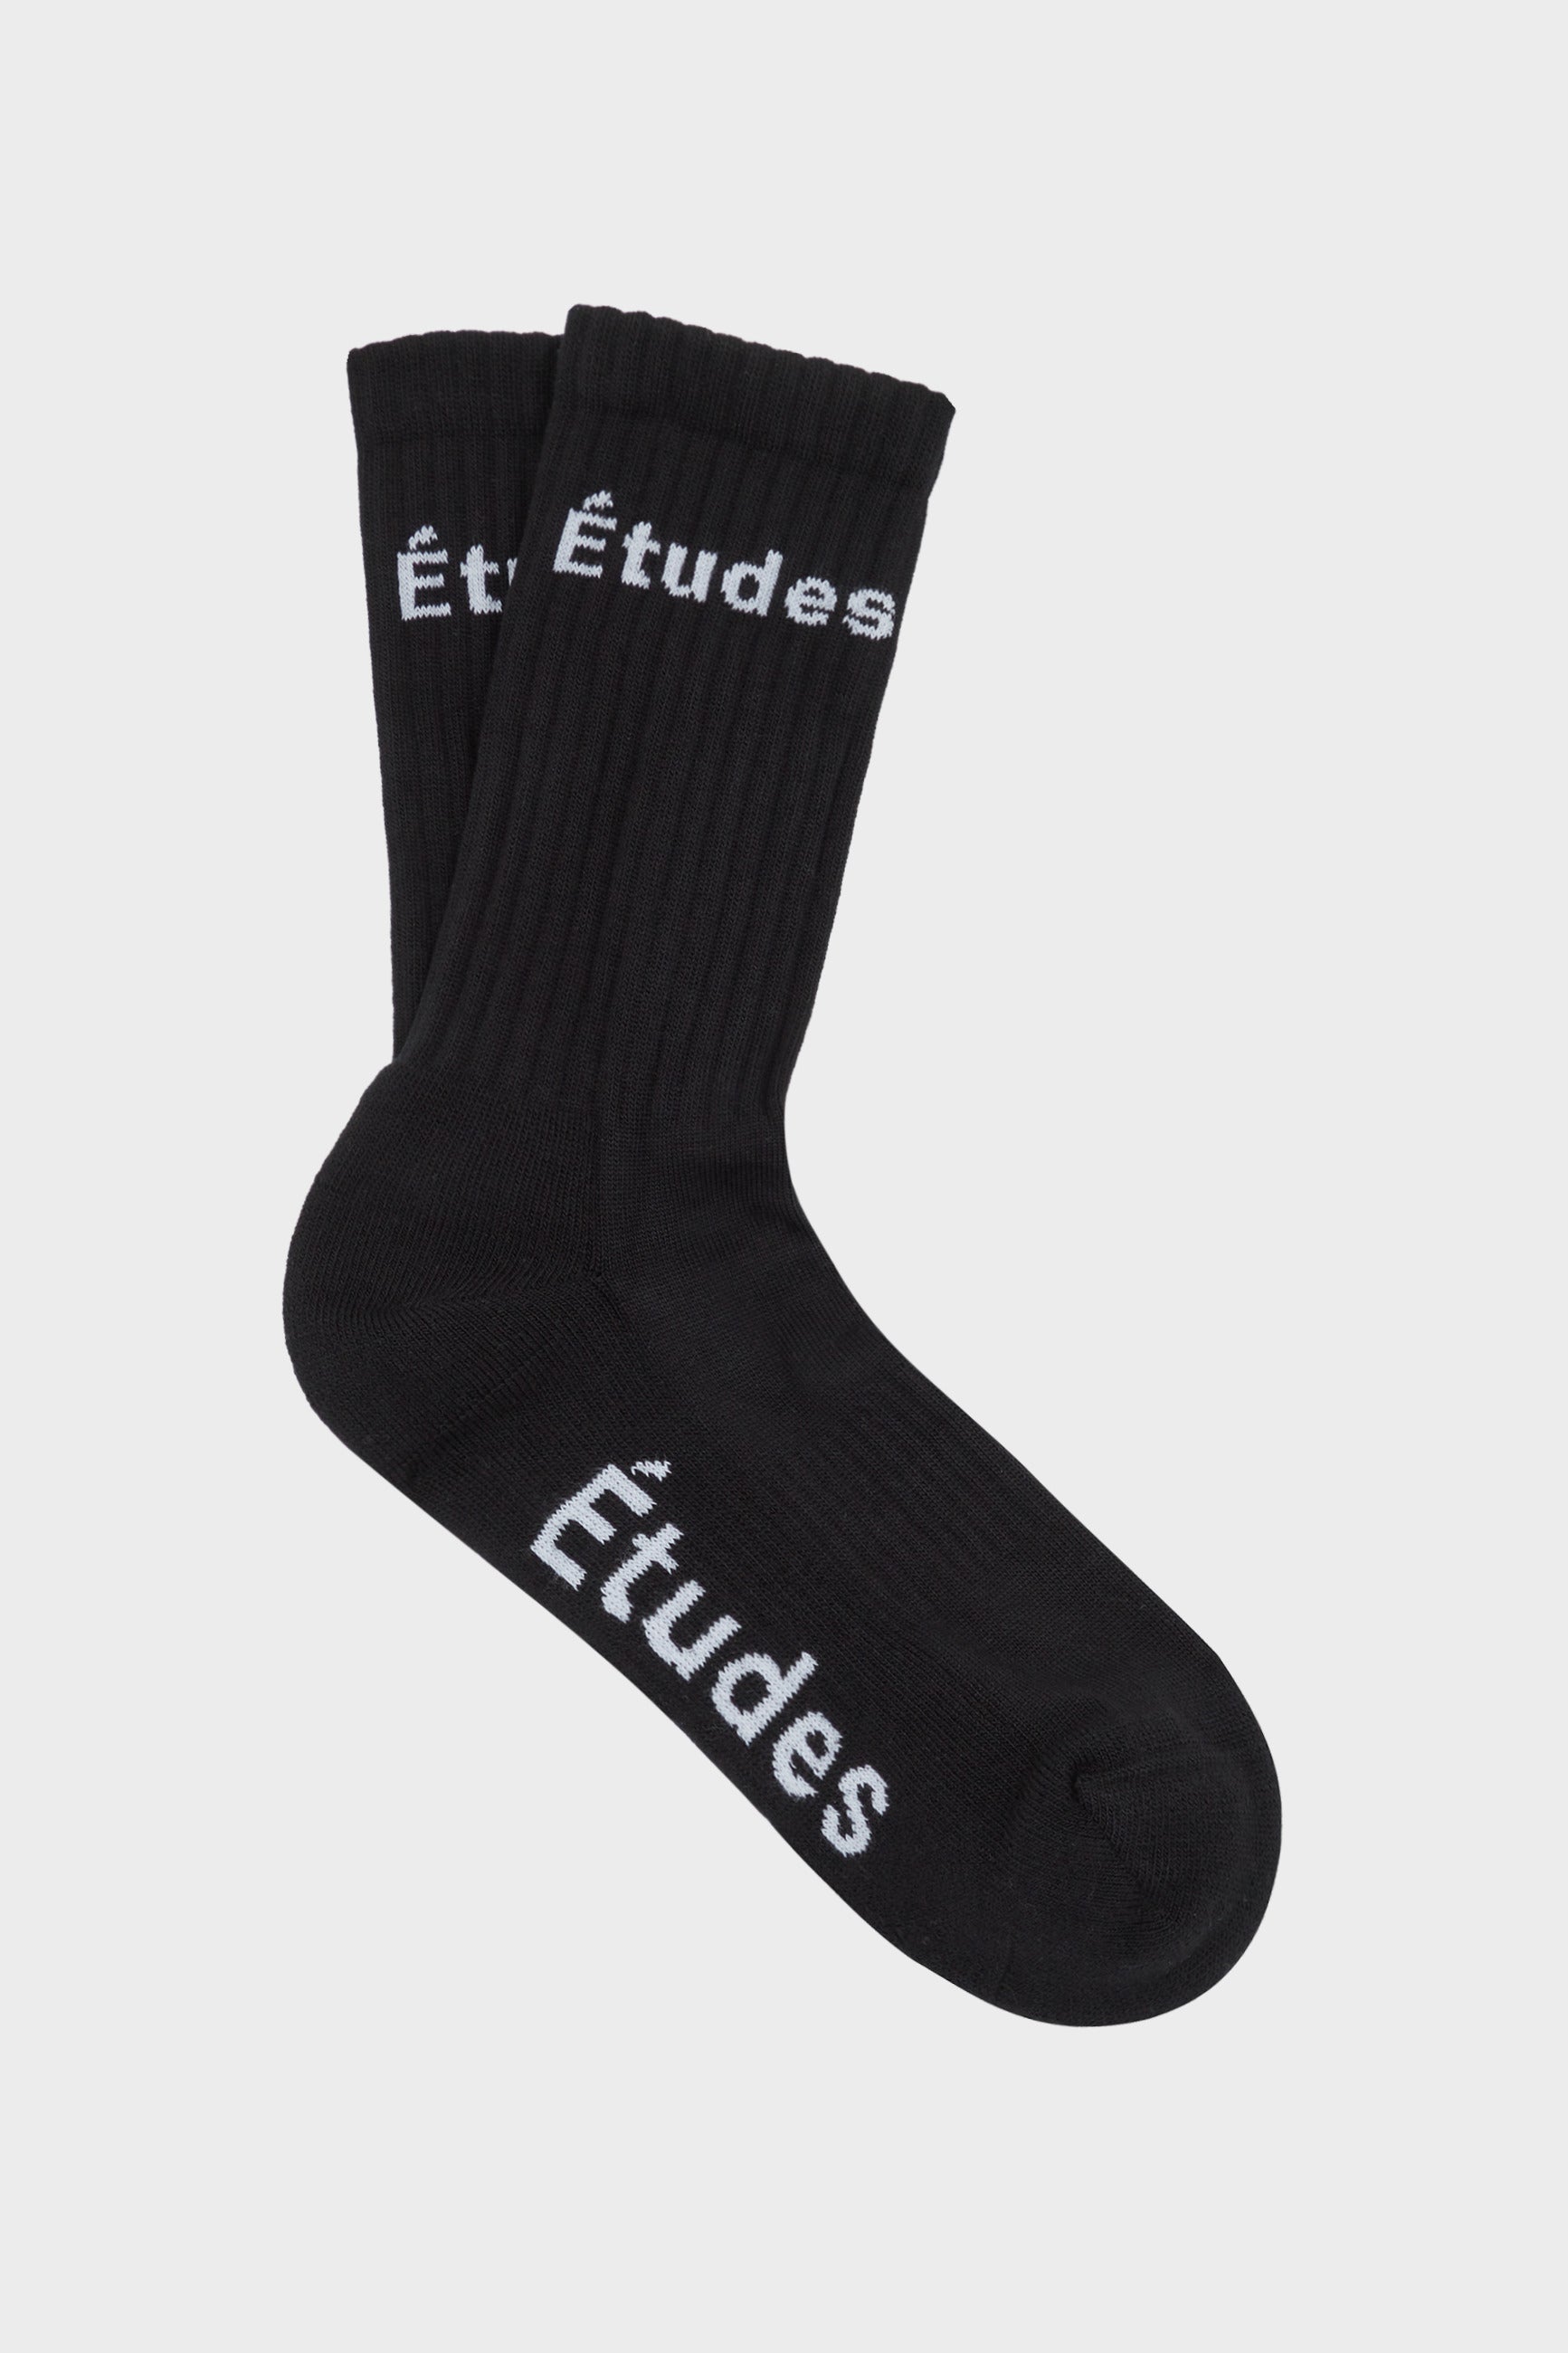 Études MEMBER ETUDES BLACK socks 1